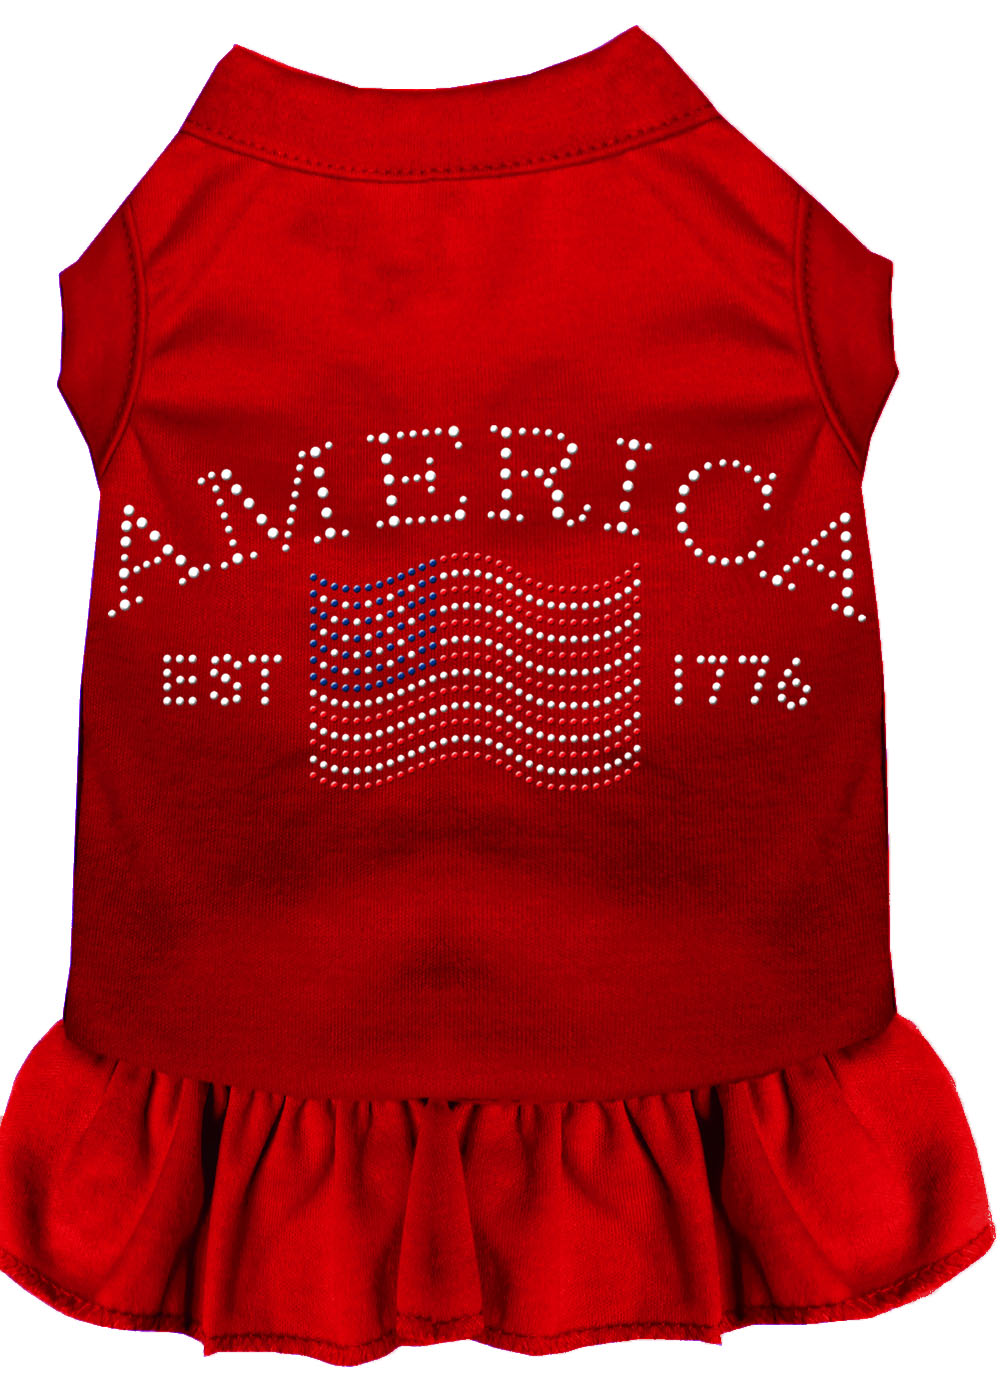 Classic America Rhinestone Dress Red Lg